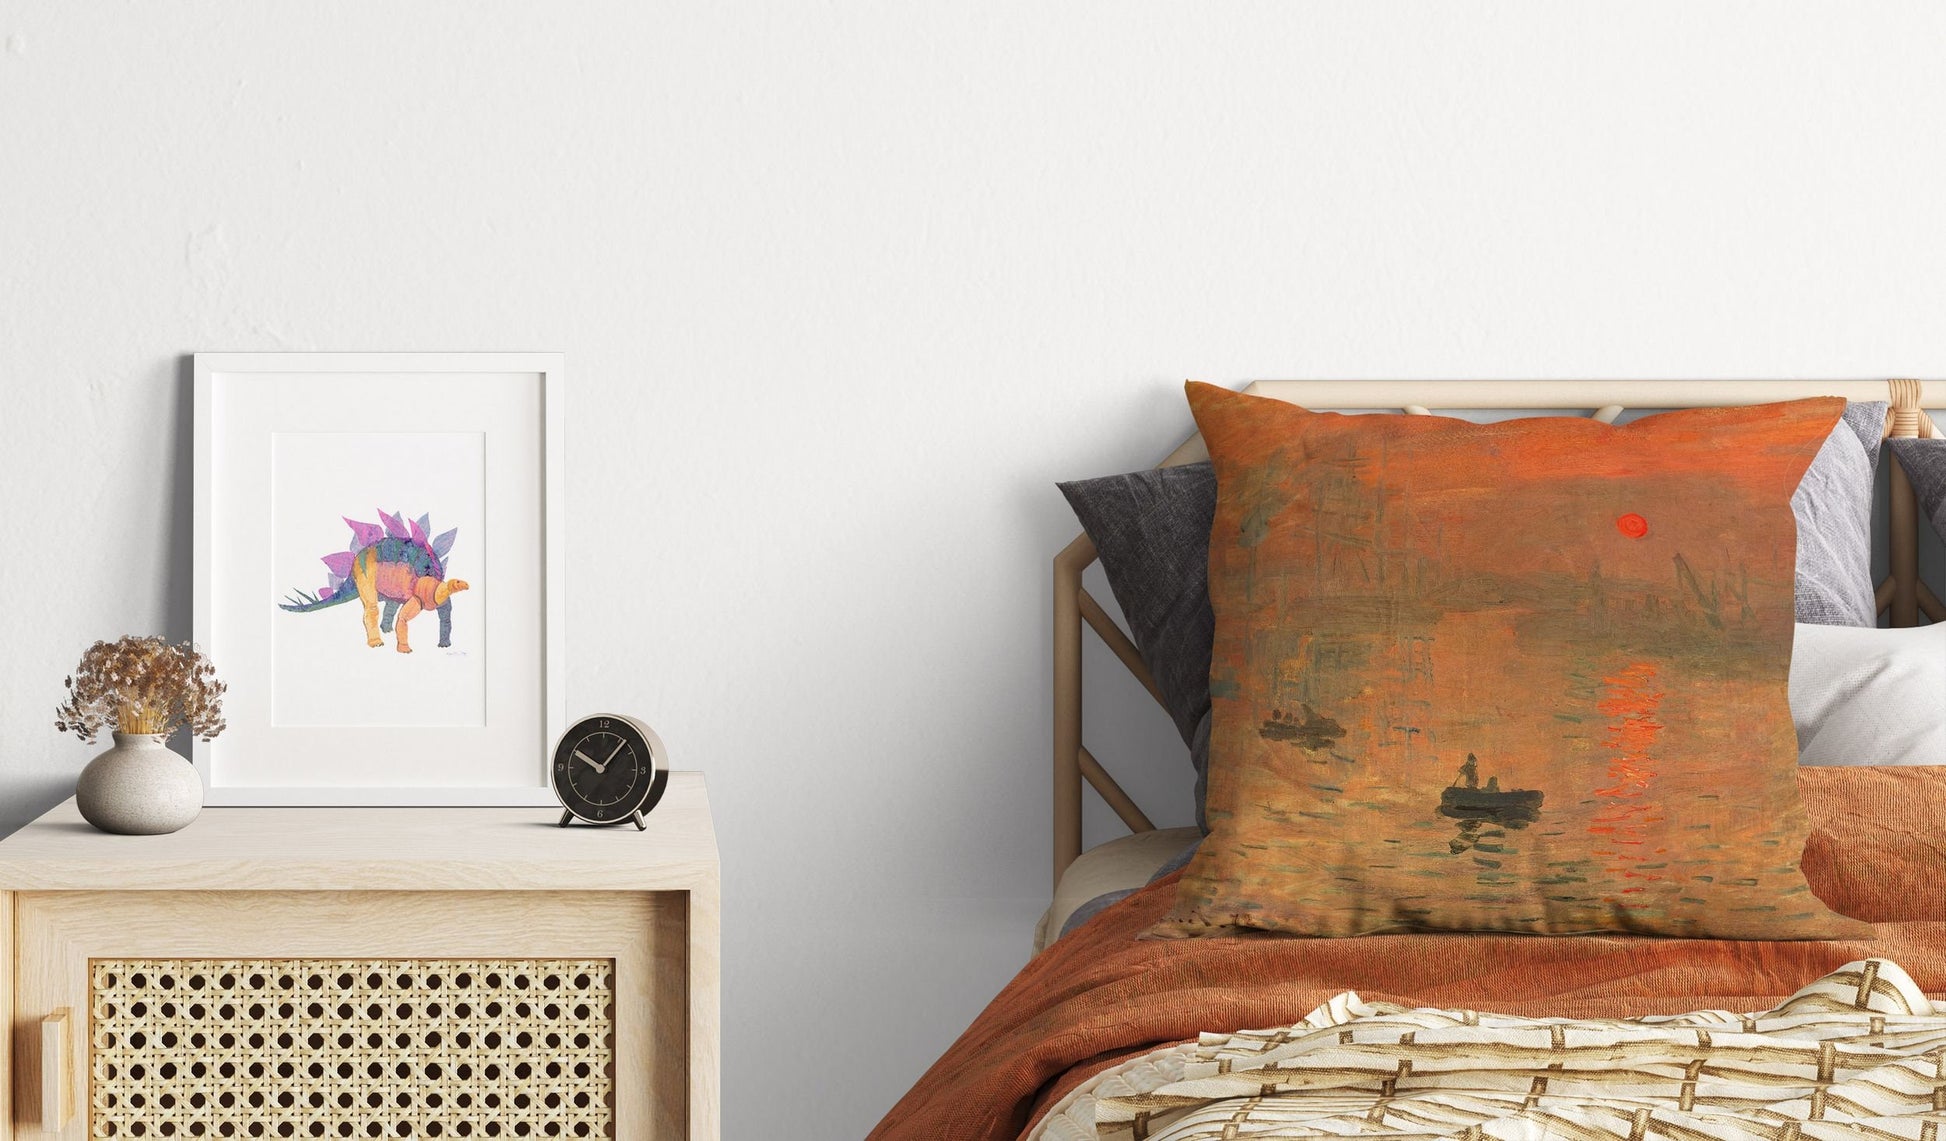 Claude Monet Famous Painting Impression Sunrise, Toss Pillow, Throw Pillow Cover, Designer Pillow, Orange Pillow, Indoor Pillow Cases